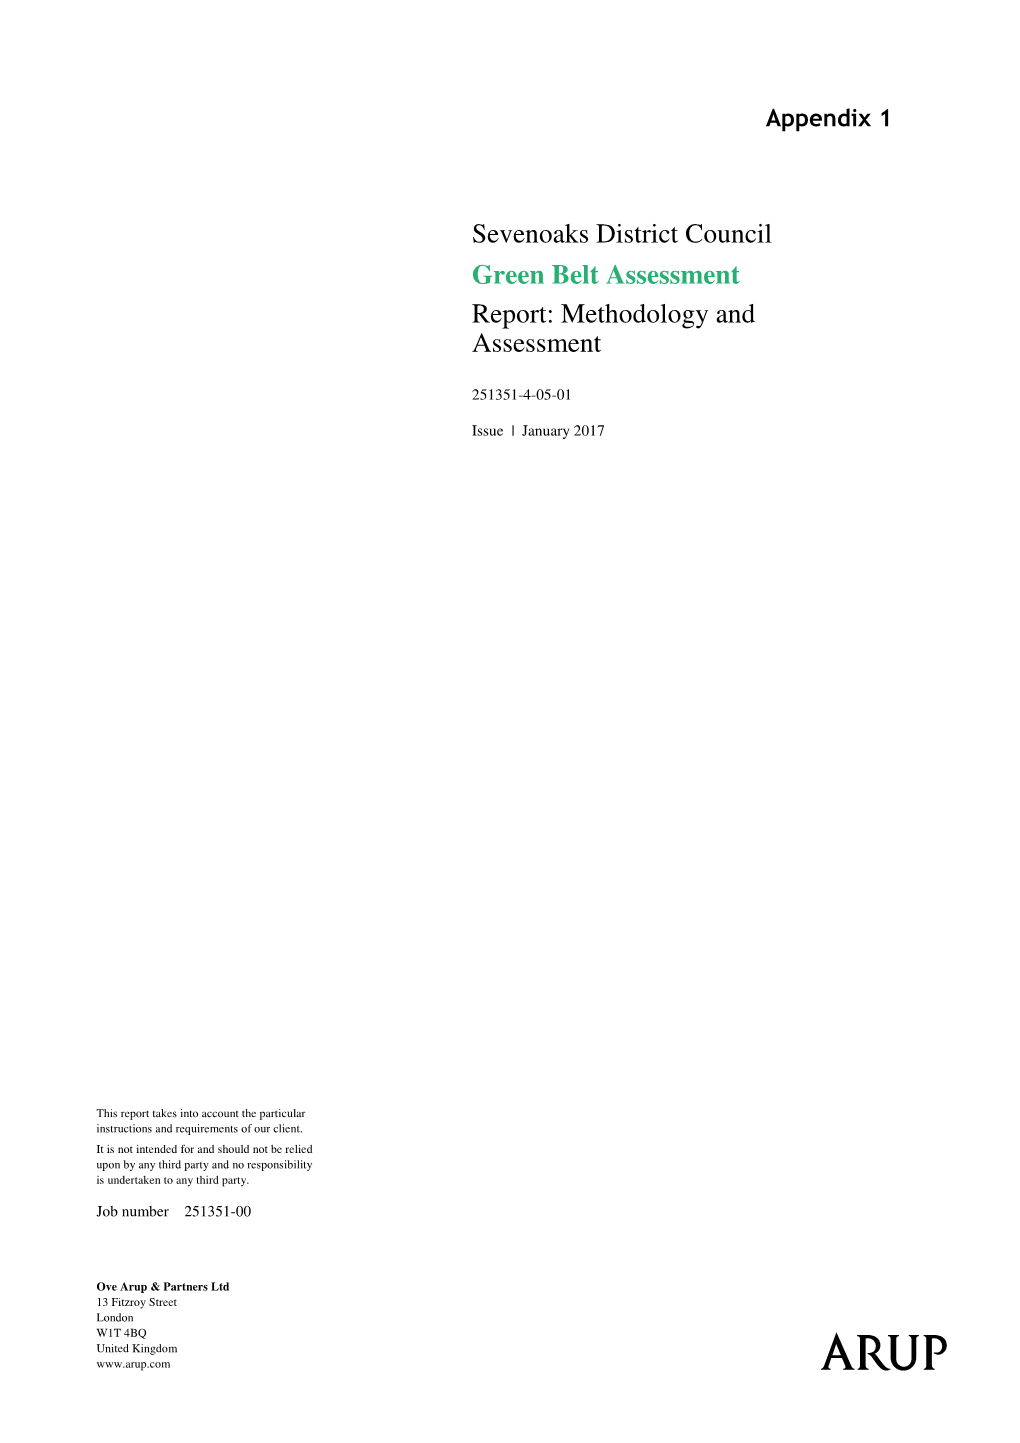 Sevenoaks District Council Green Belt Assessment Report: Methodology and Assessment